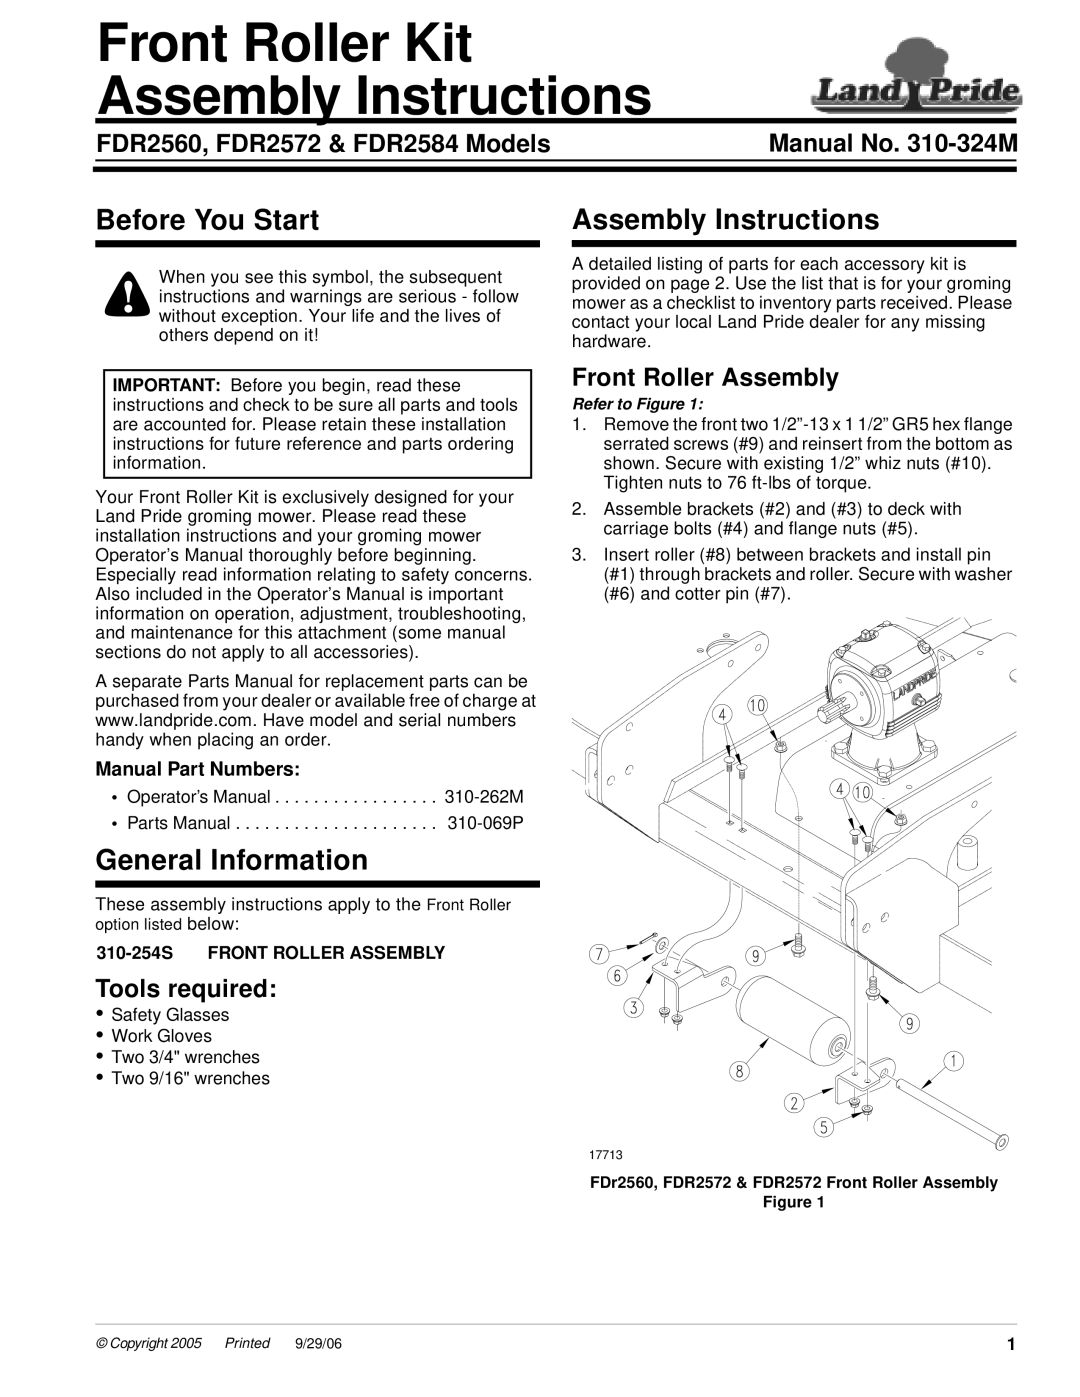 Land Pride FDR2560 installation instructions 310-254SFRONT ROLLER ASSEMBLY, Front Roller Kit Assembly Instructions 